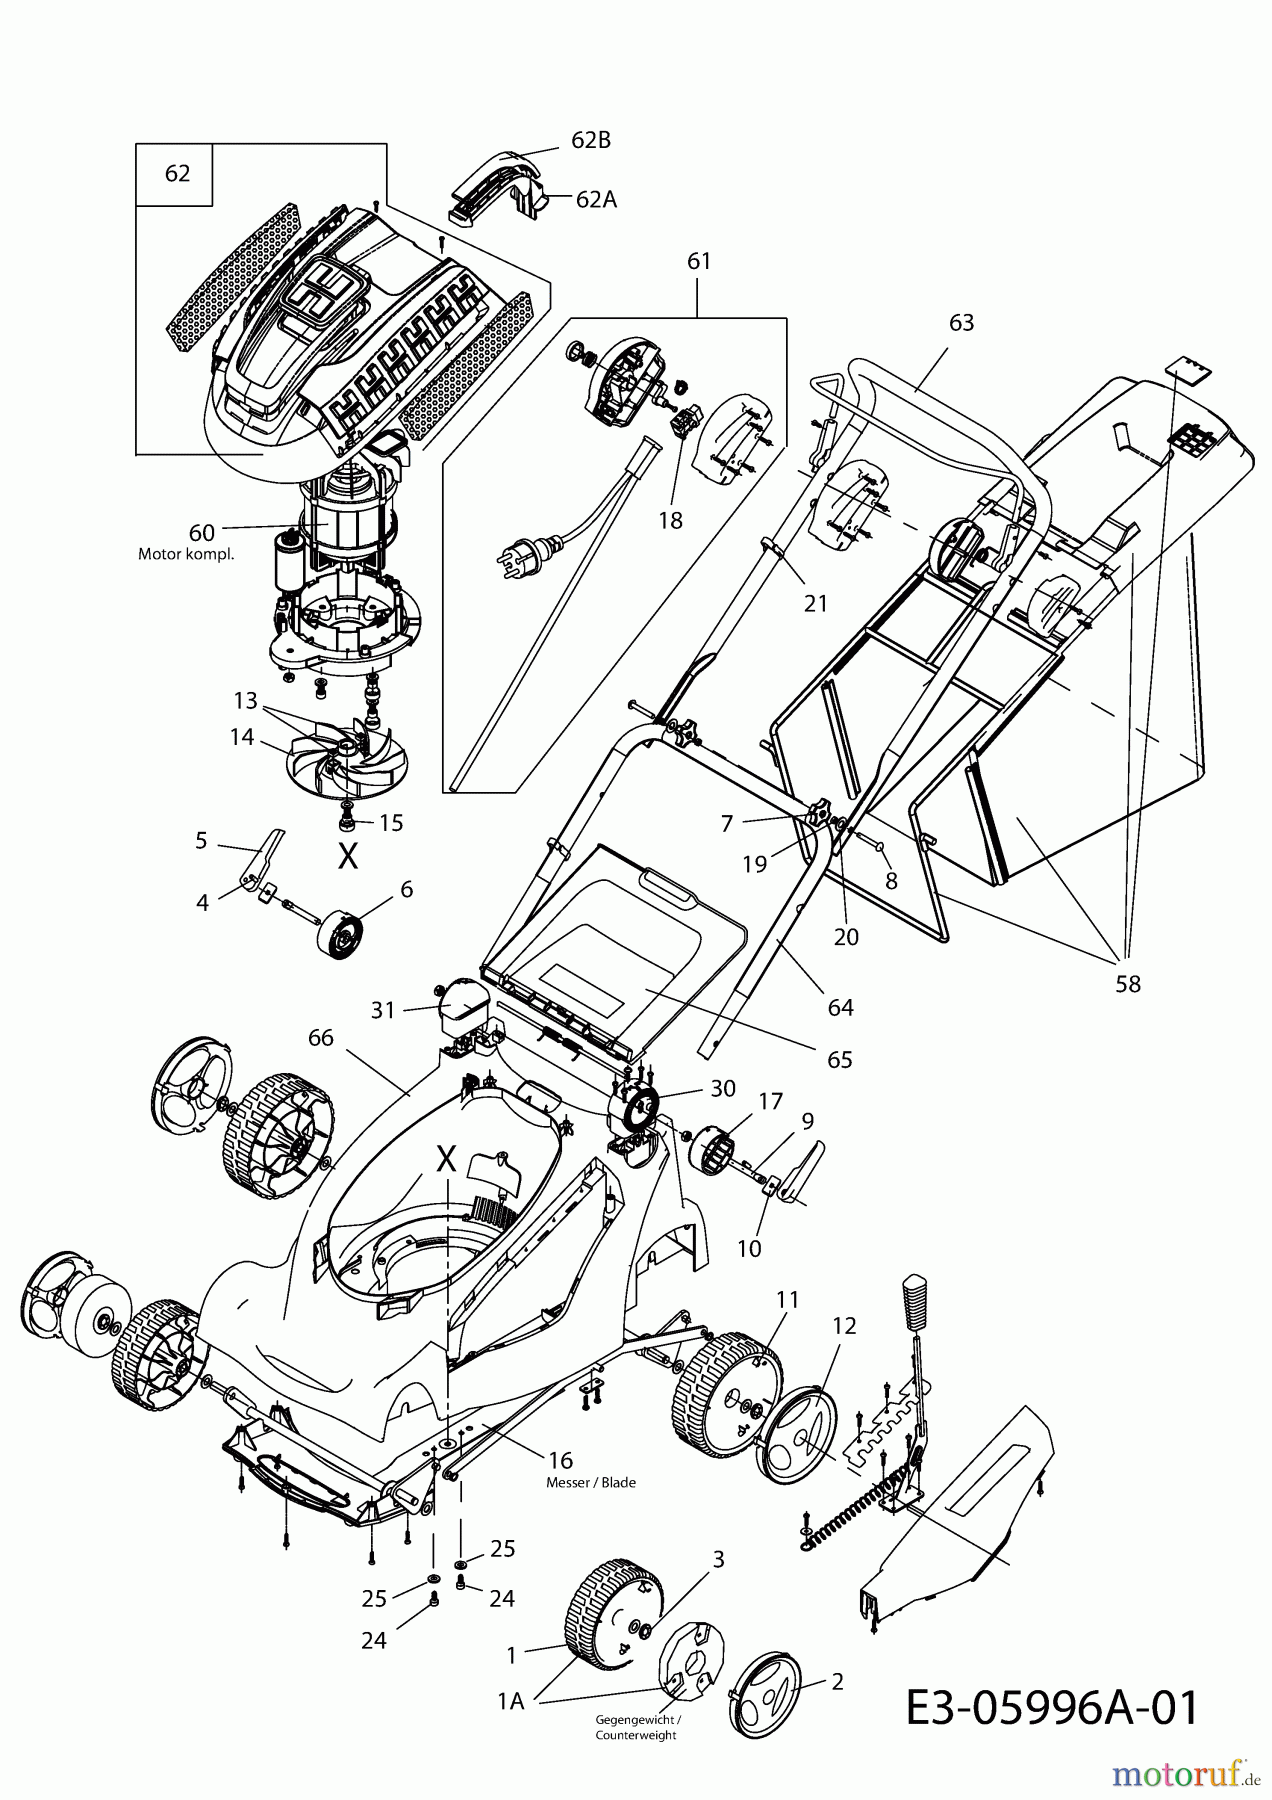  Plantiflor Electric mower 1842 ER 18ACE4L2601  (2010) Basic machine